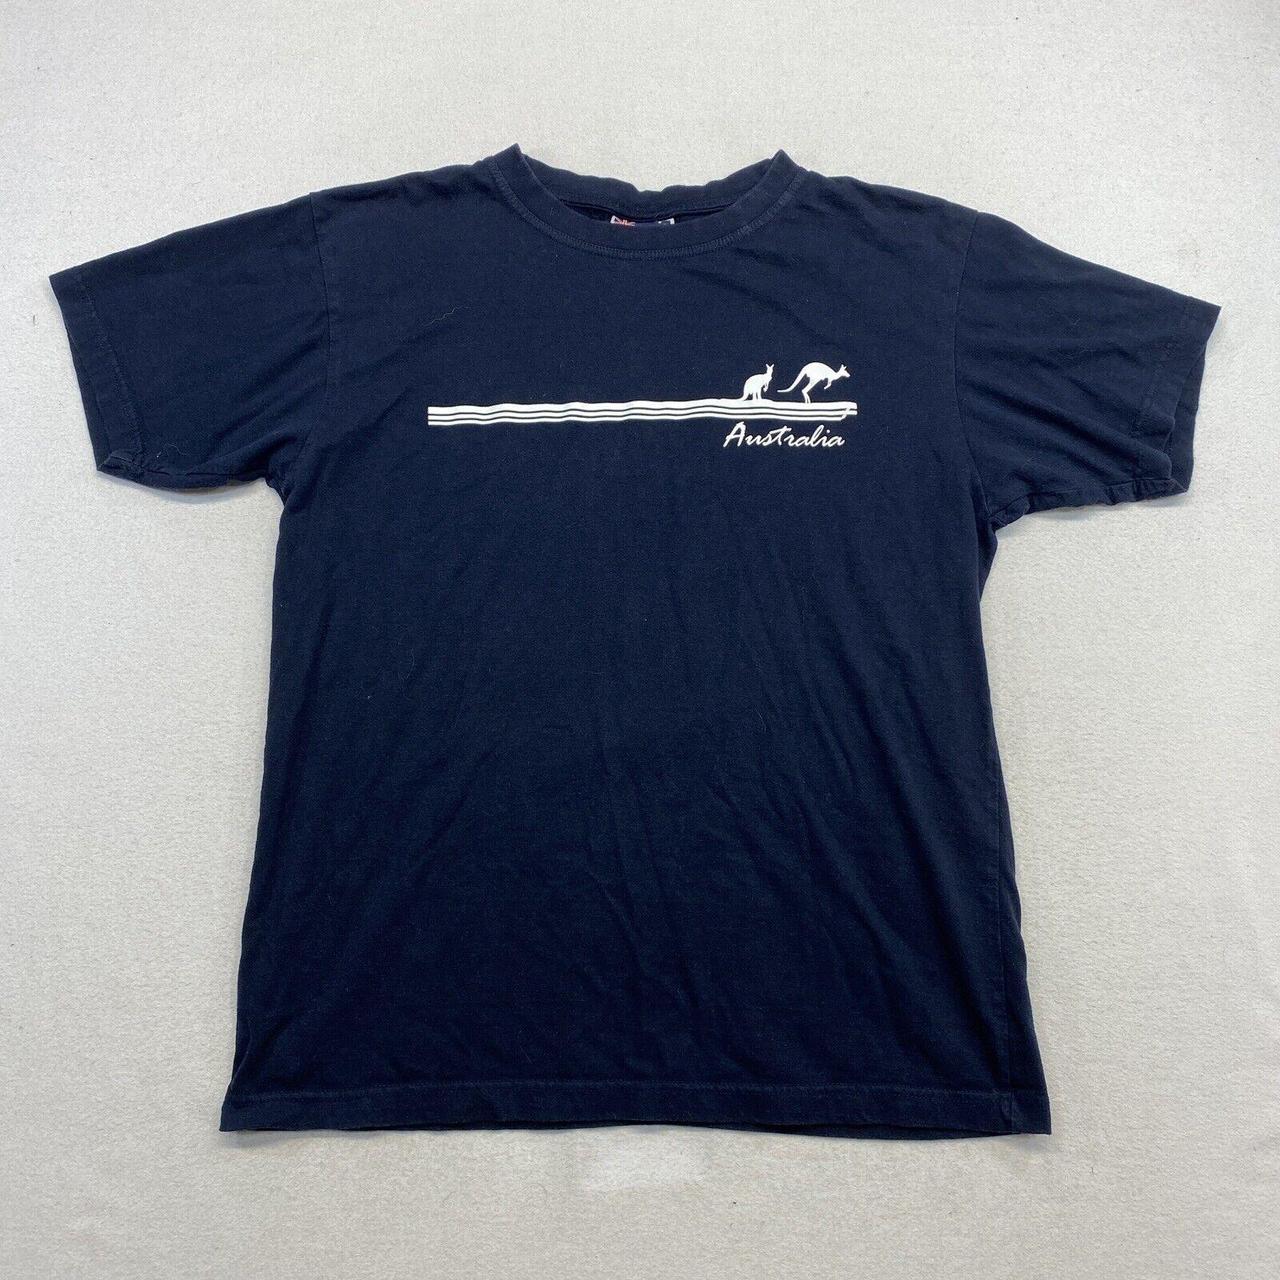 Product Image 1 - Australia T Shirt Adult Small